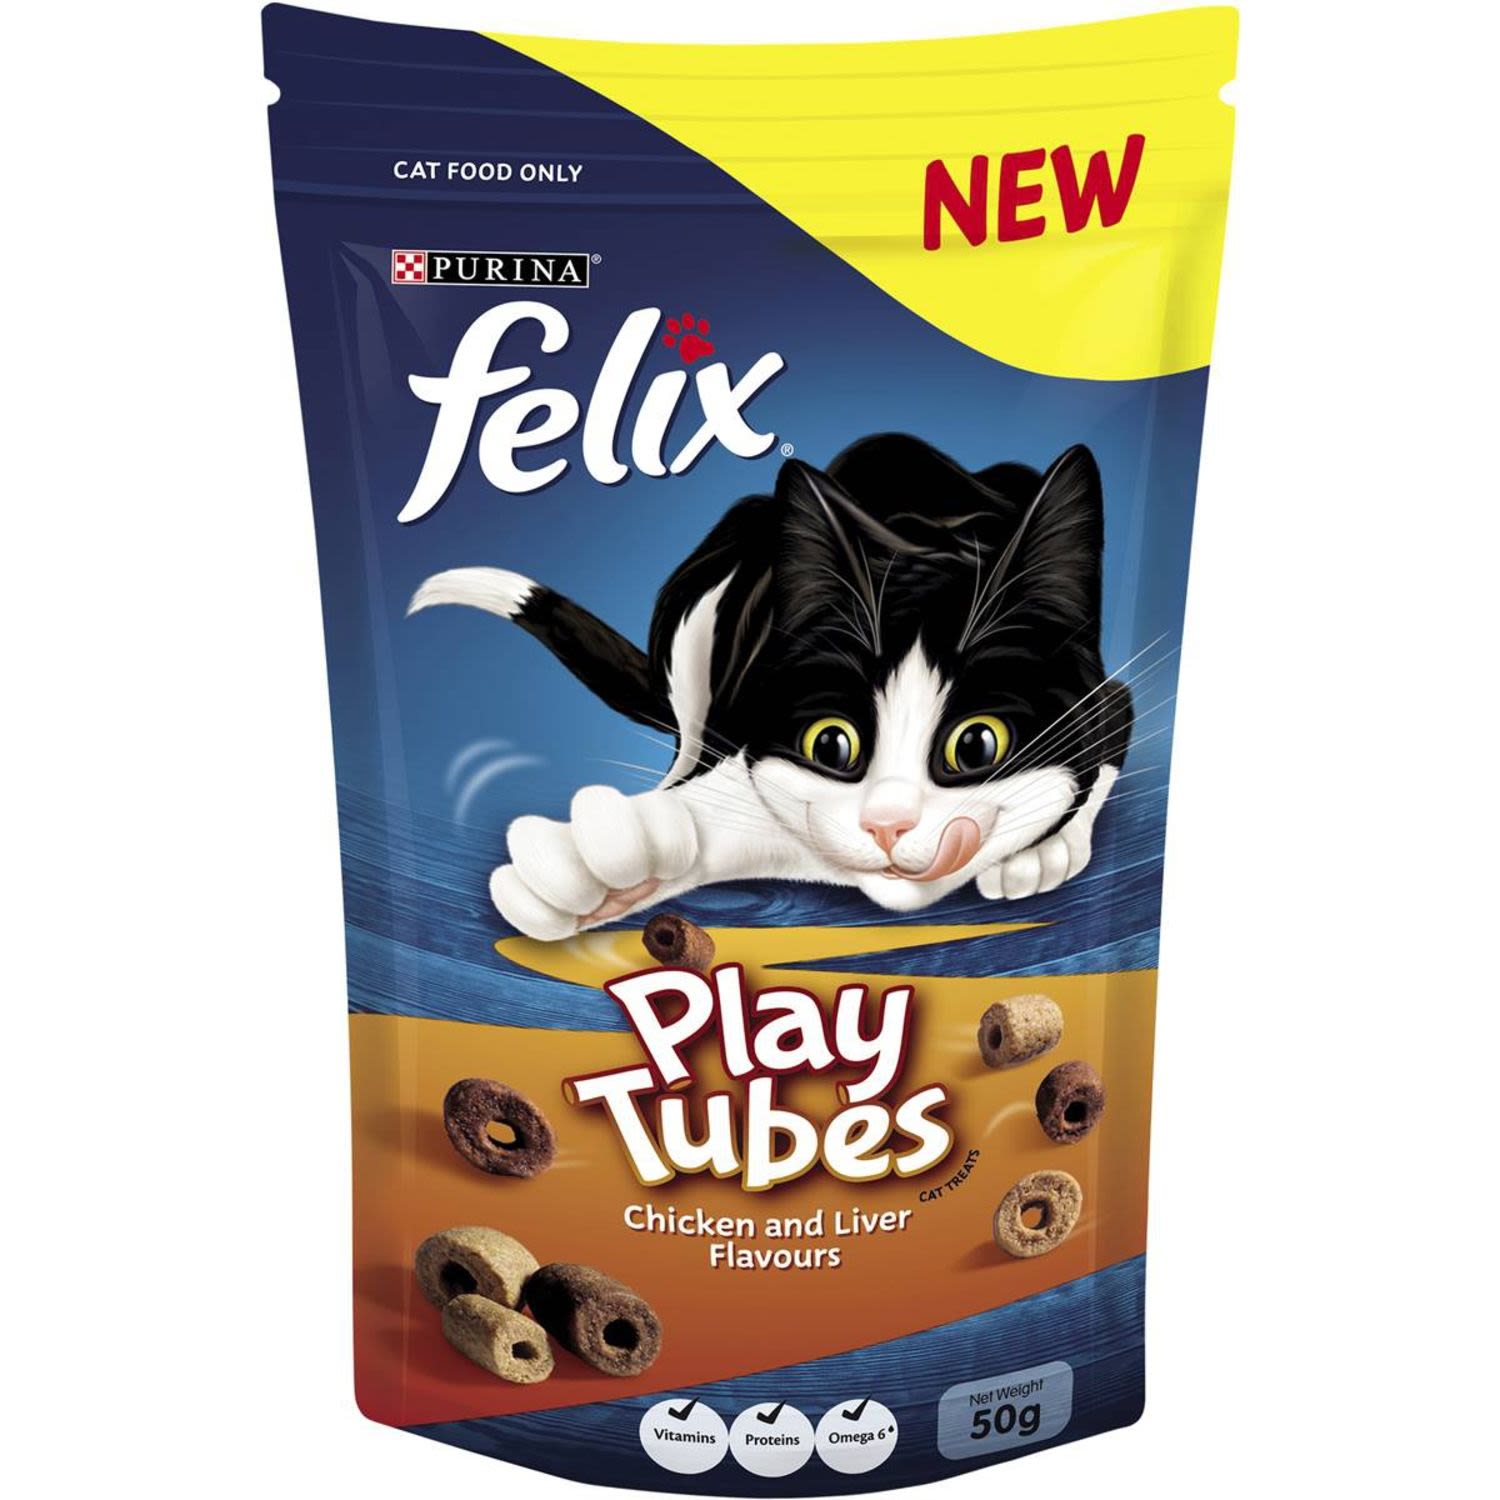 Felix Play Tubes Chicken & Liver Flavours, 50 Gram